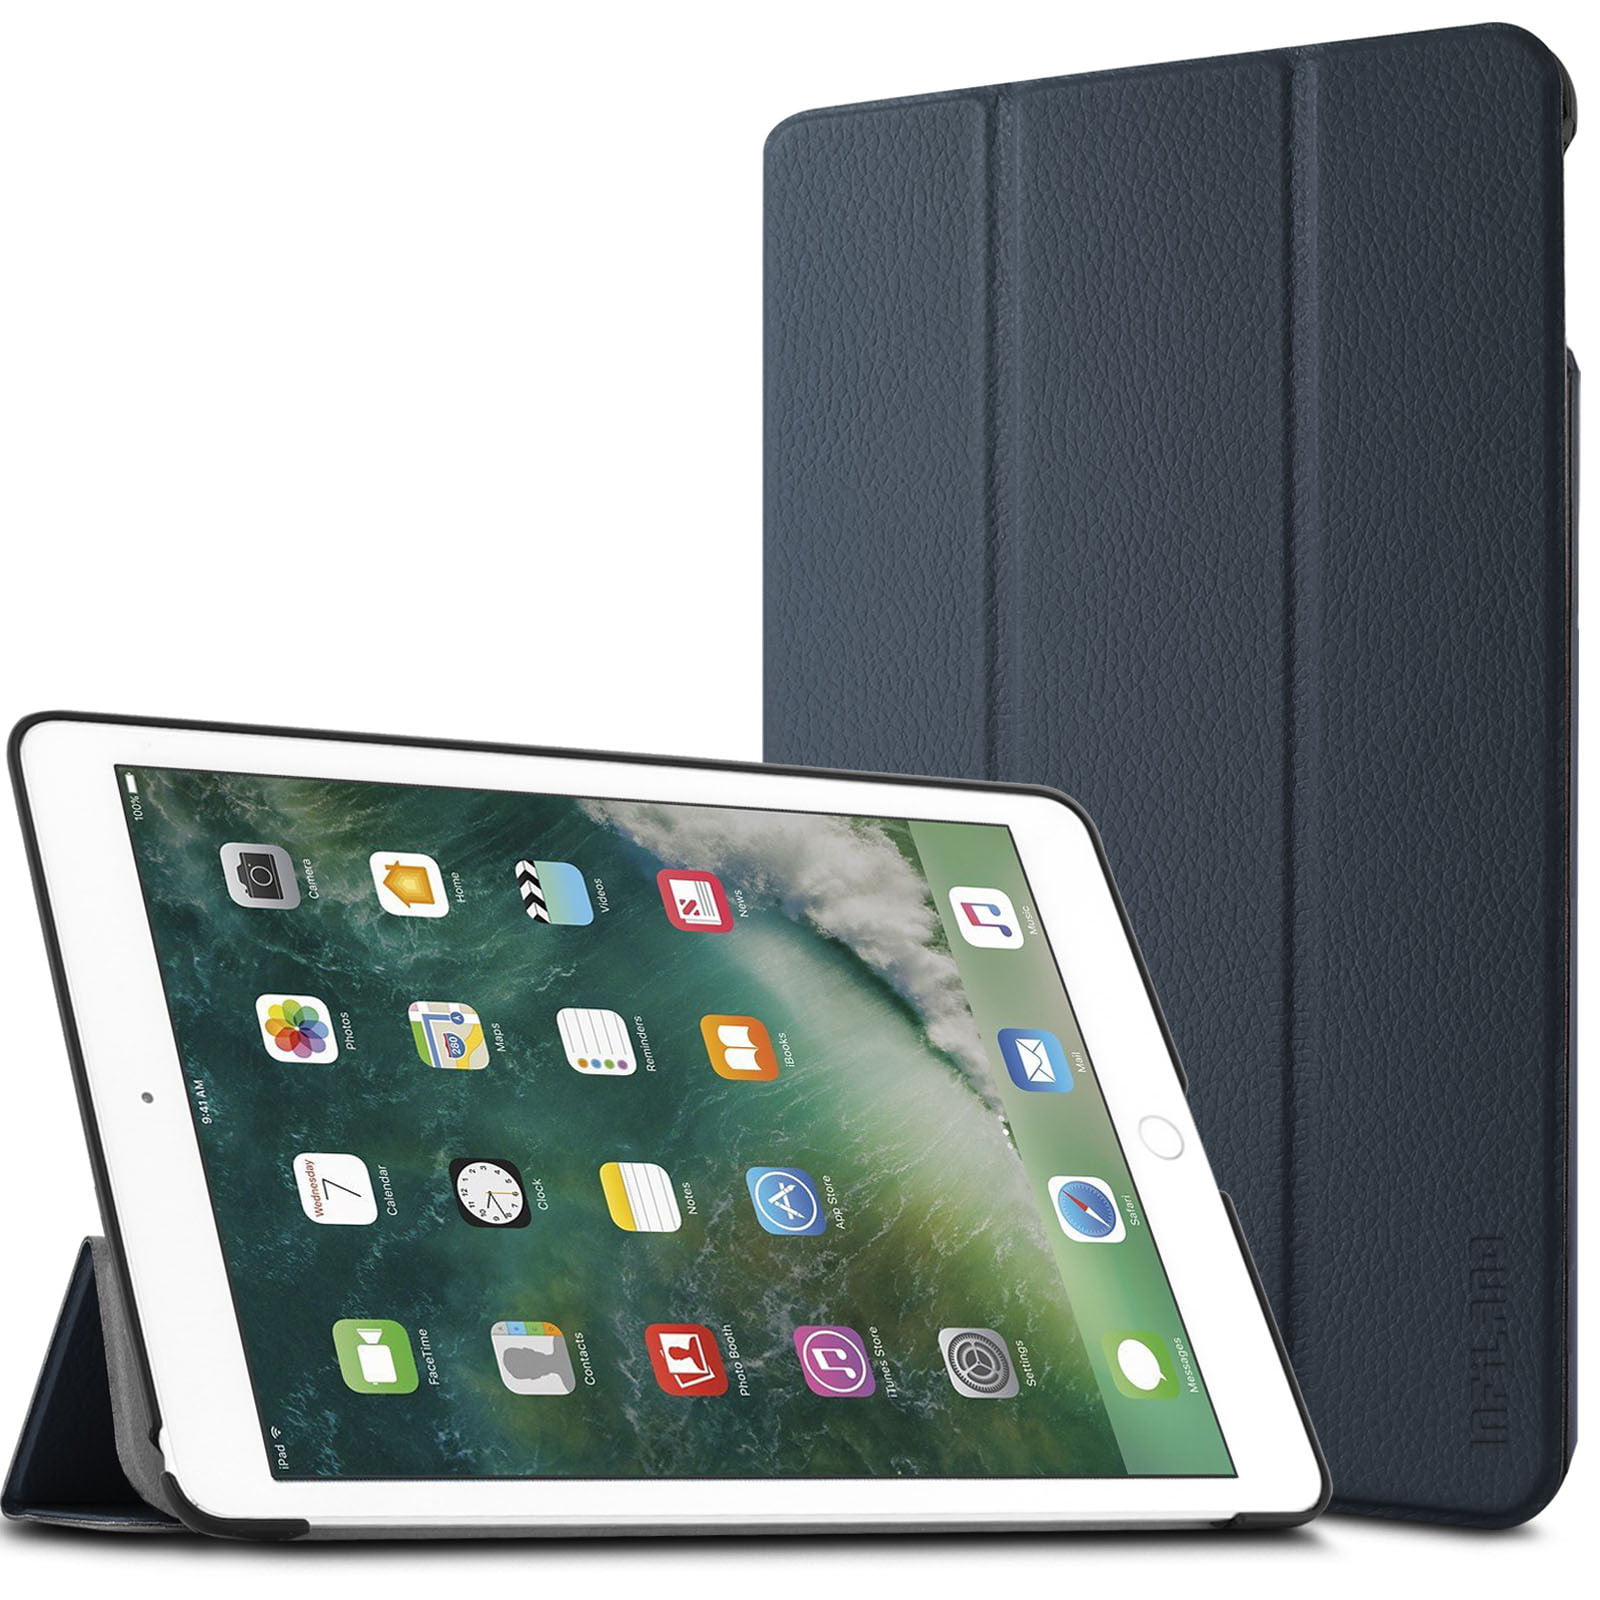 Infiland Slim Lightweight Smart Cover Case For Apple Ipad Pro 12 9 Inch 17 15 Release Tablet Navy Walmart Com